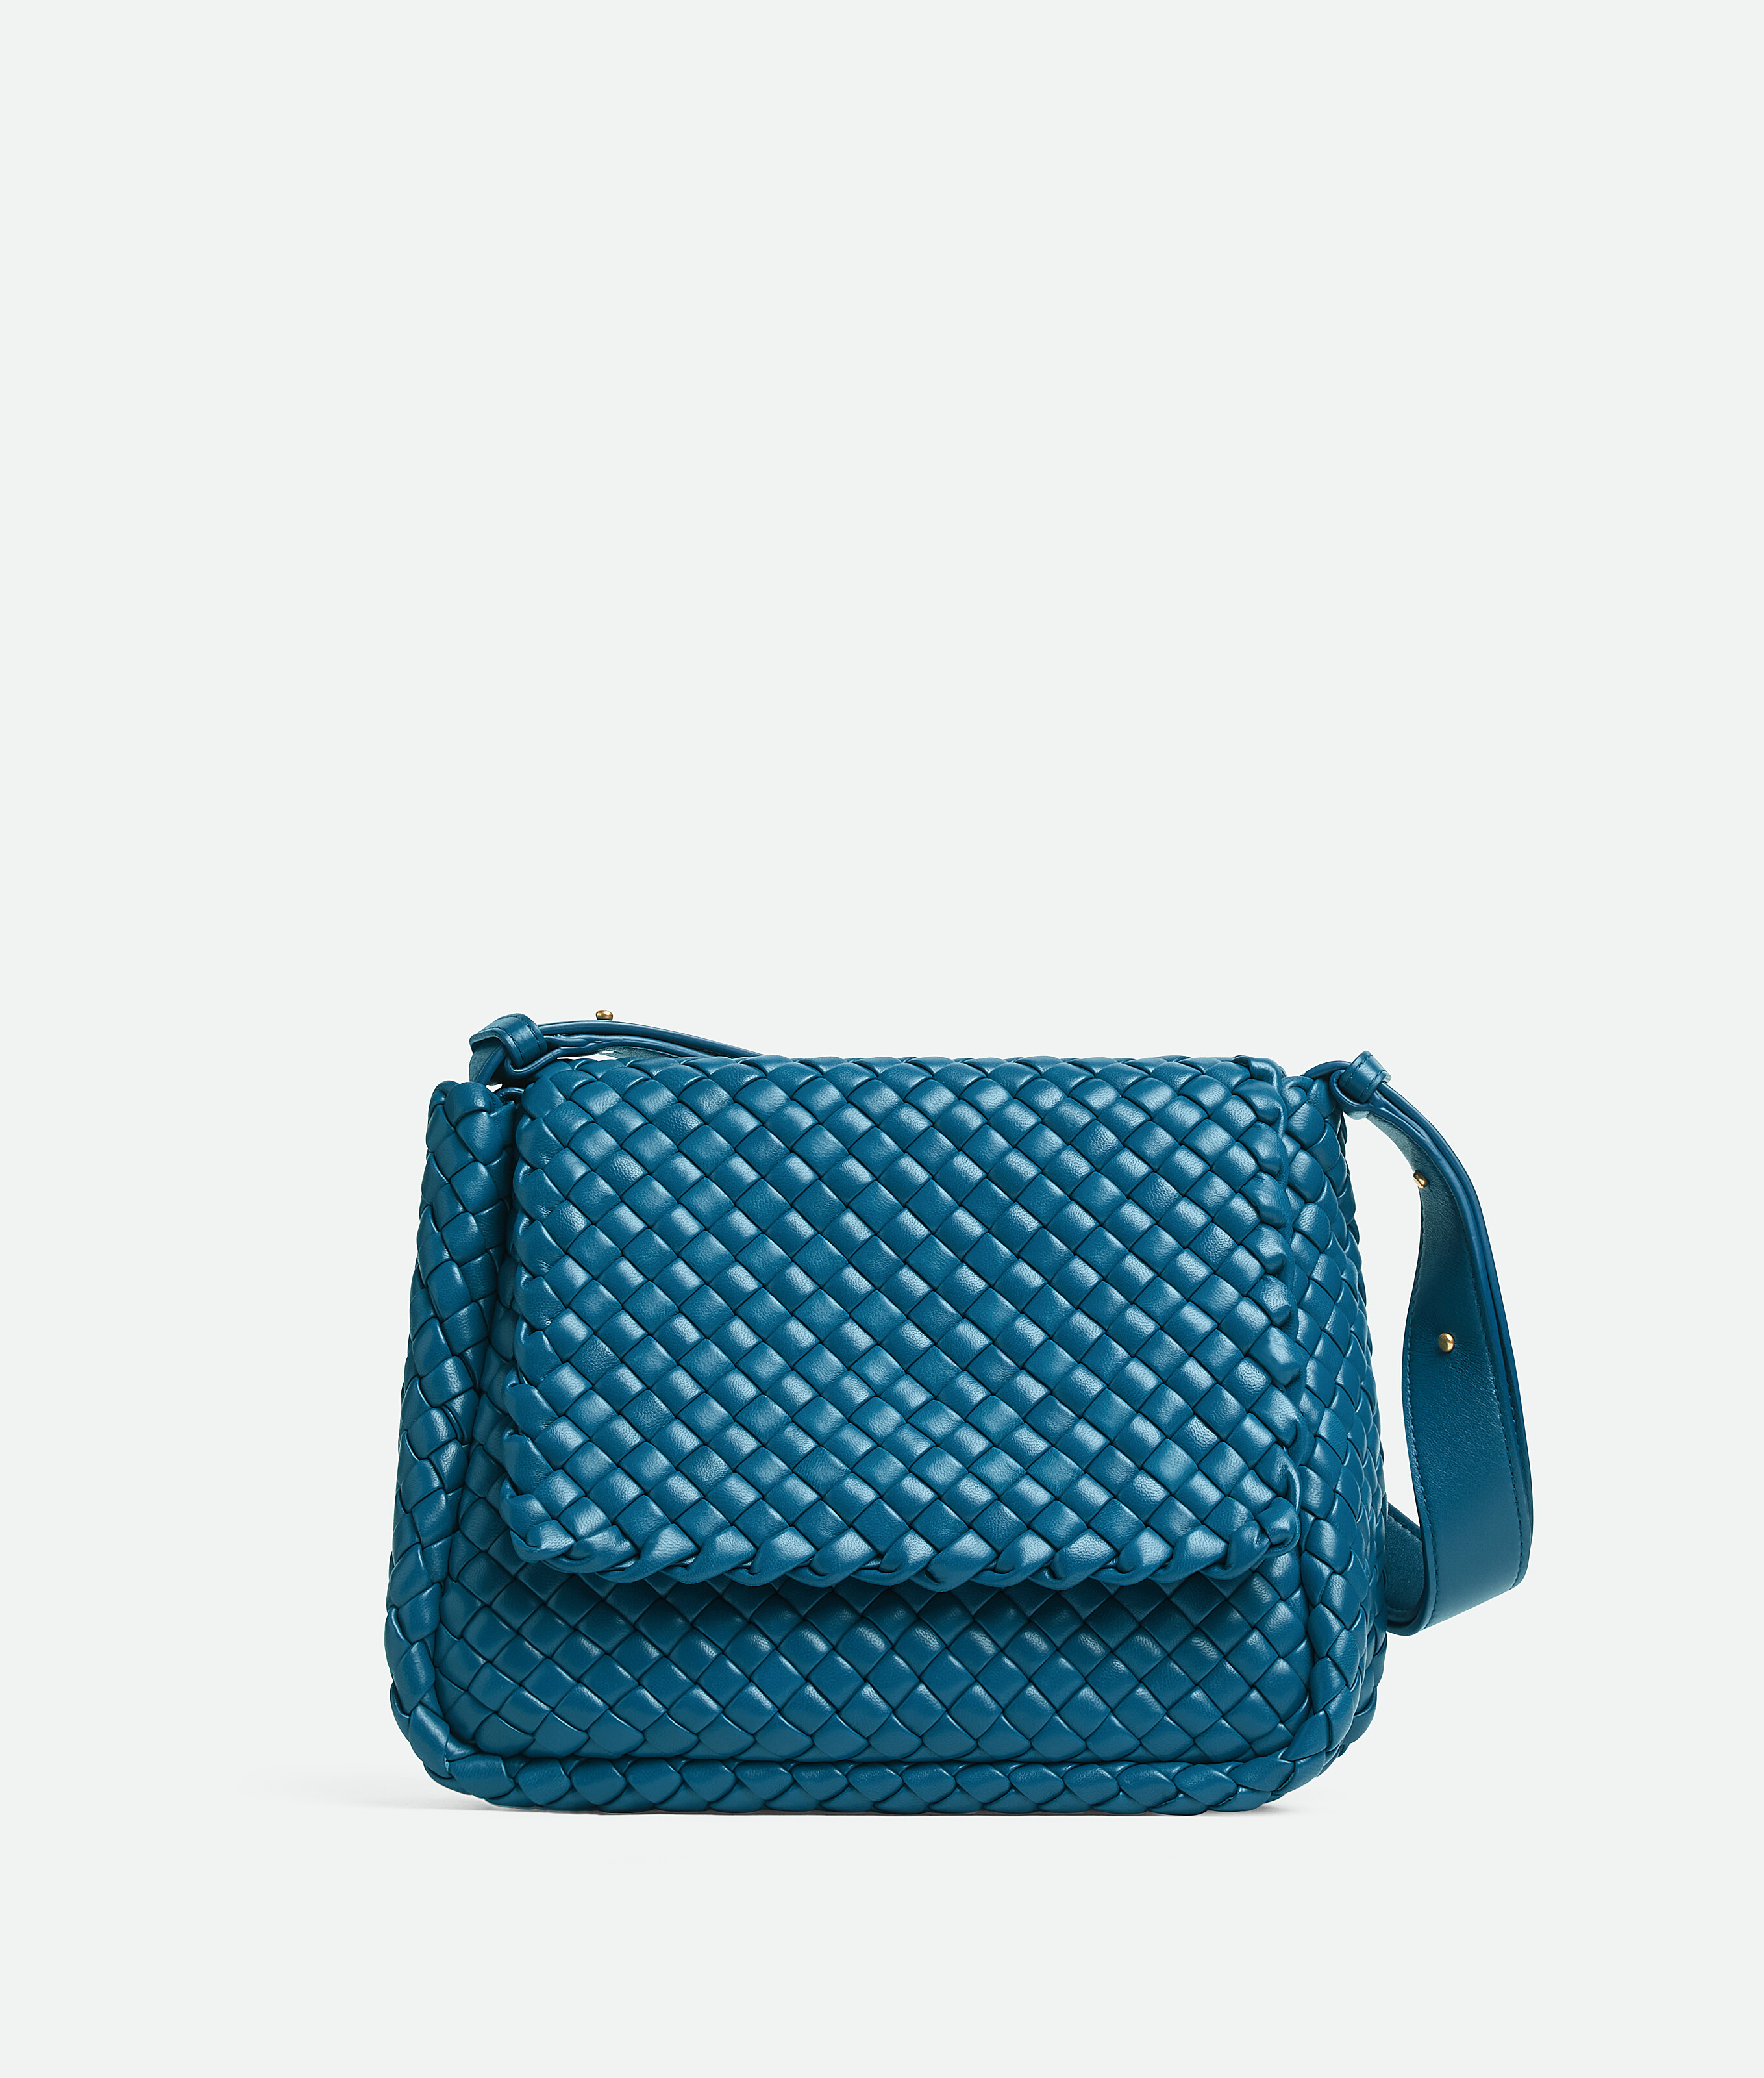 Bottega Veneta® Women's Small Cobble Shoulder Bag in Deep pacific 